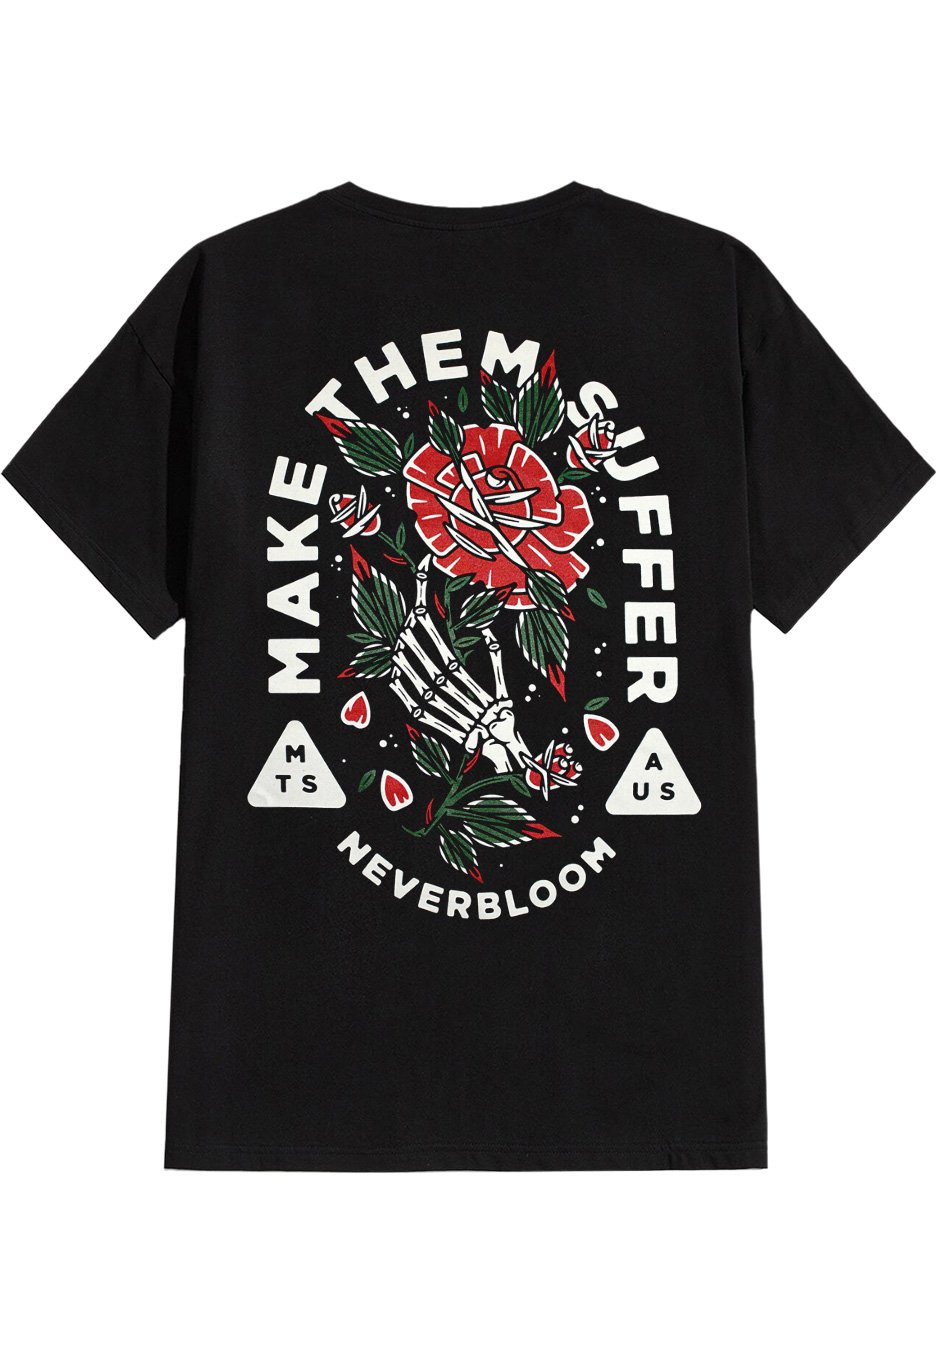 Make Them Suffer - Neverbloom Anniversary 2 - T-Shirt